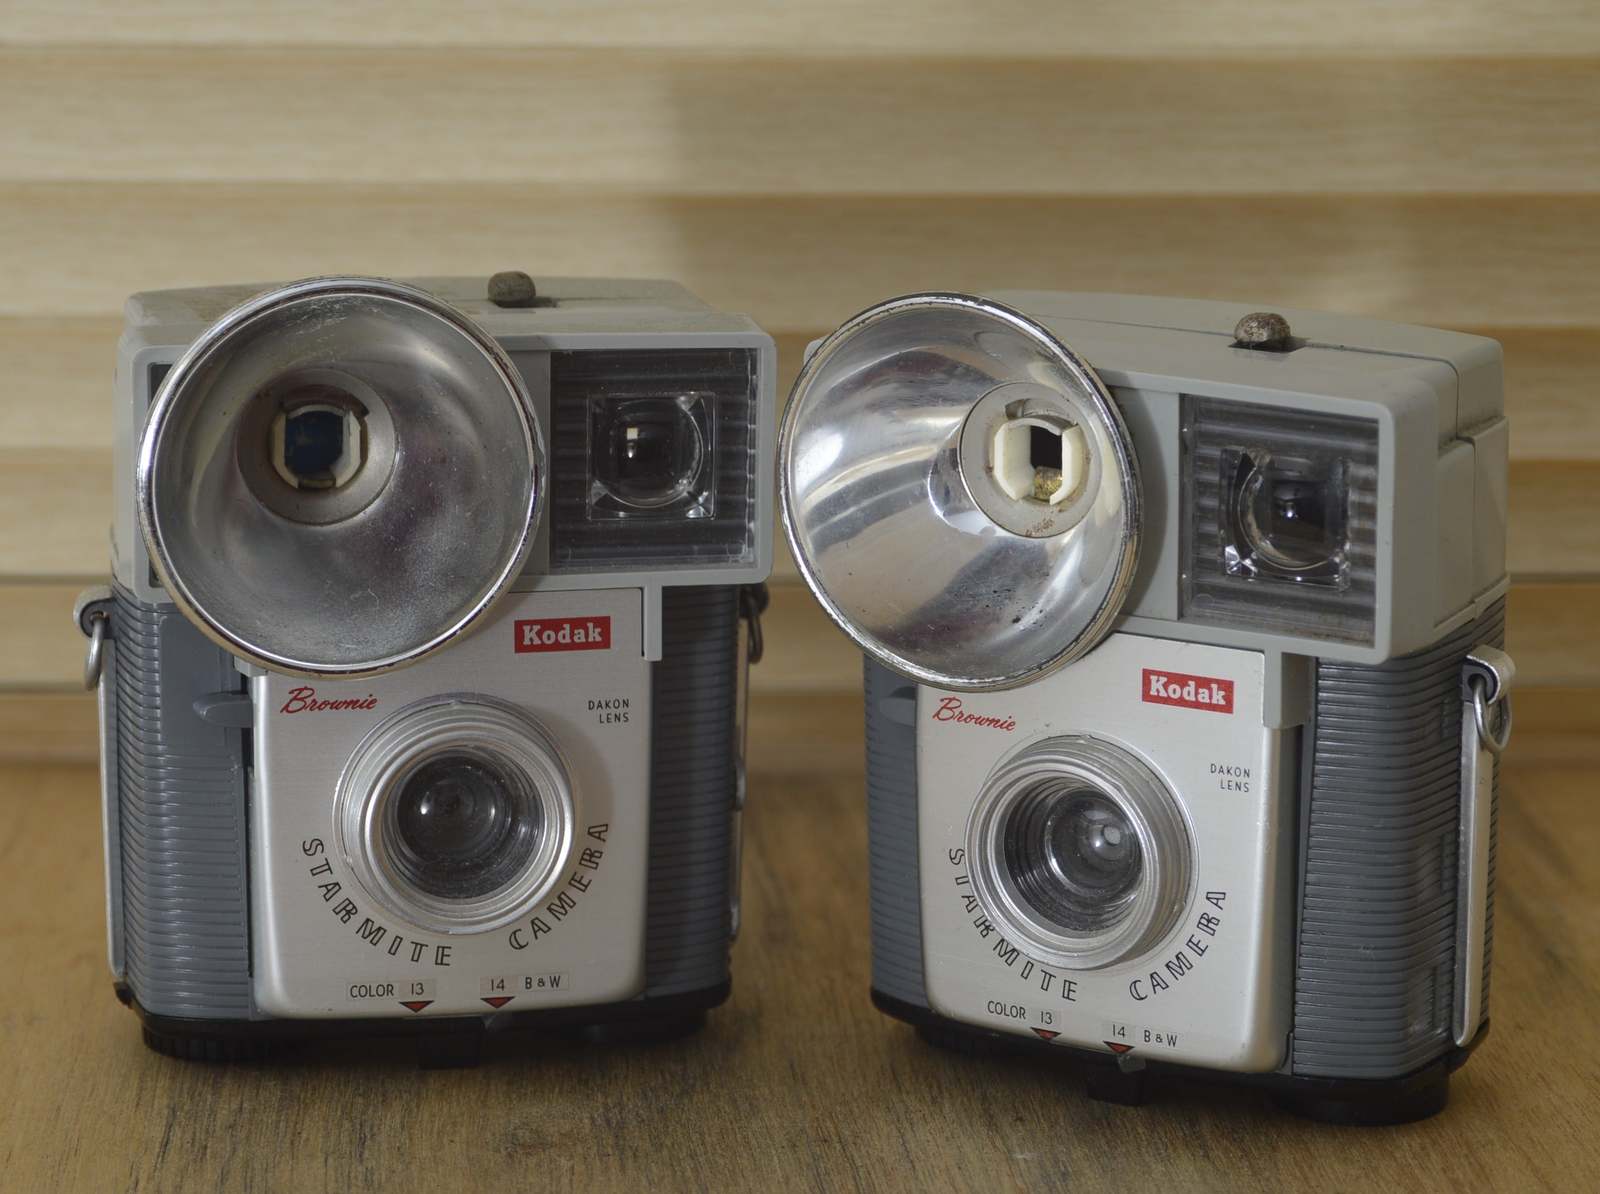 Working Kodak Brownie Starmite 127mm film camera. A great piece of film history. - $33.00 - $65.00